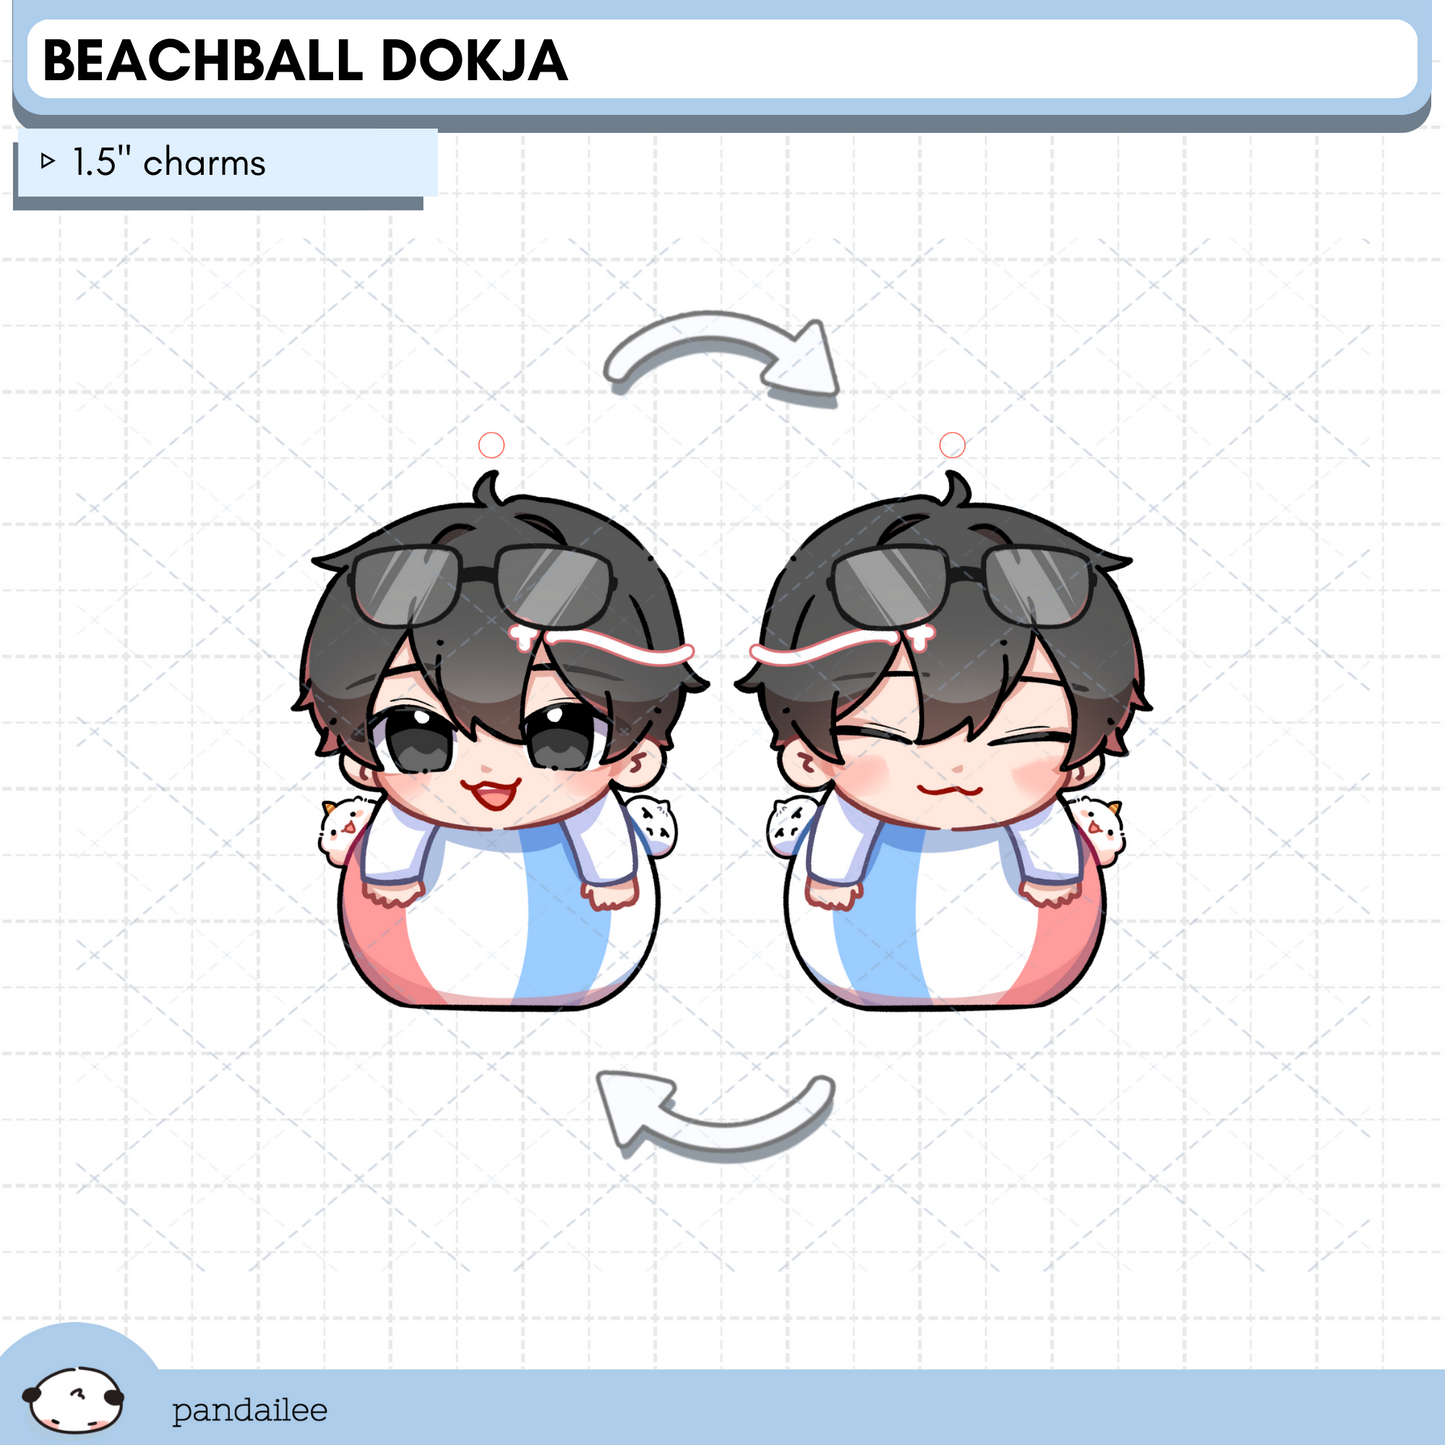 Charms┊ORV Beachball Dokja